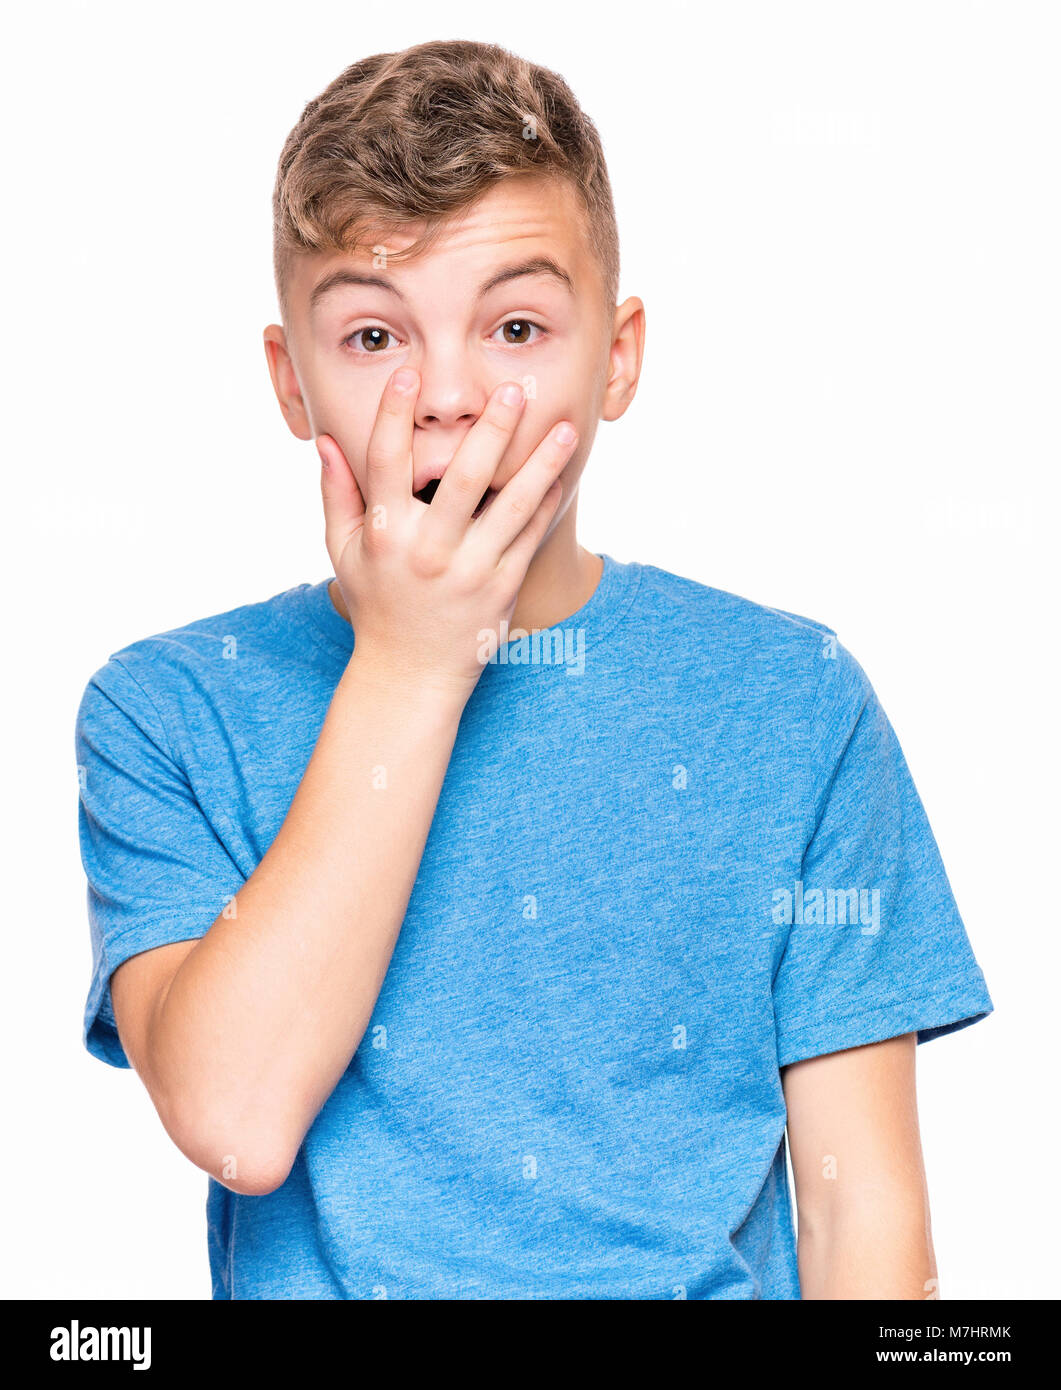 Emotional portrait of teen boy Stock Photo